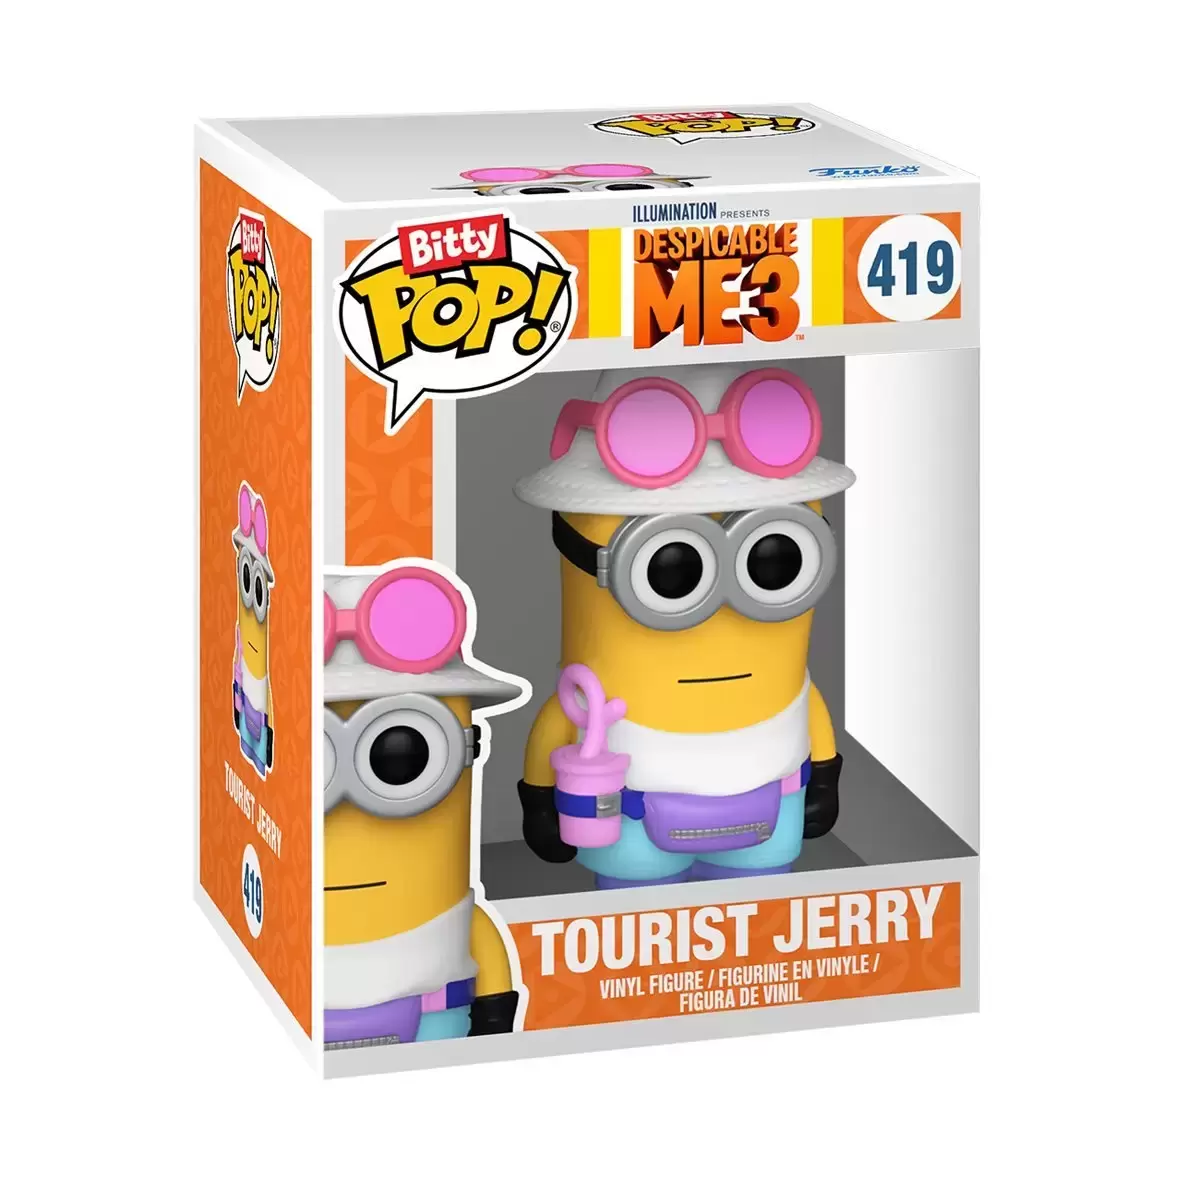 Bitty POP! - Despicable Me 3 - Tourist Jerry